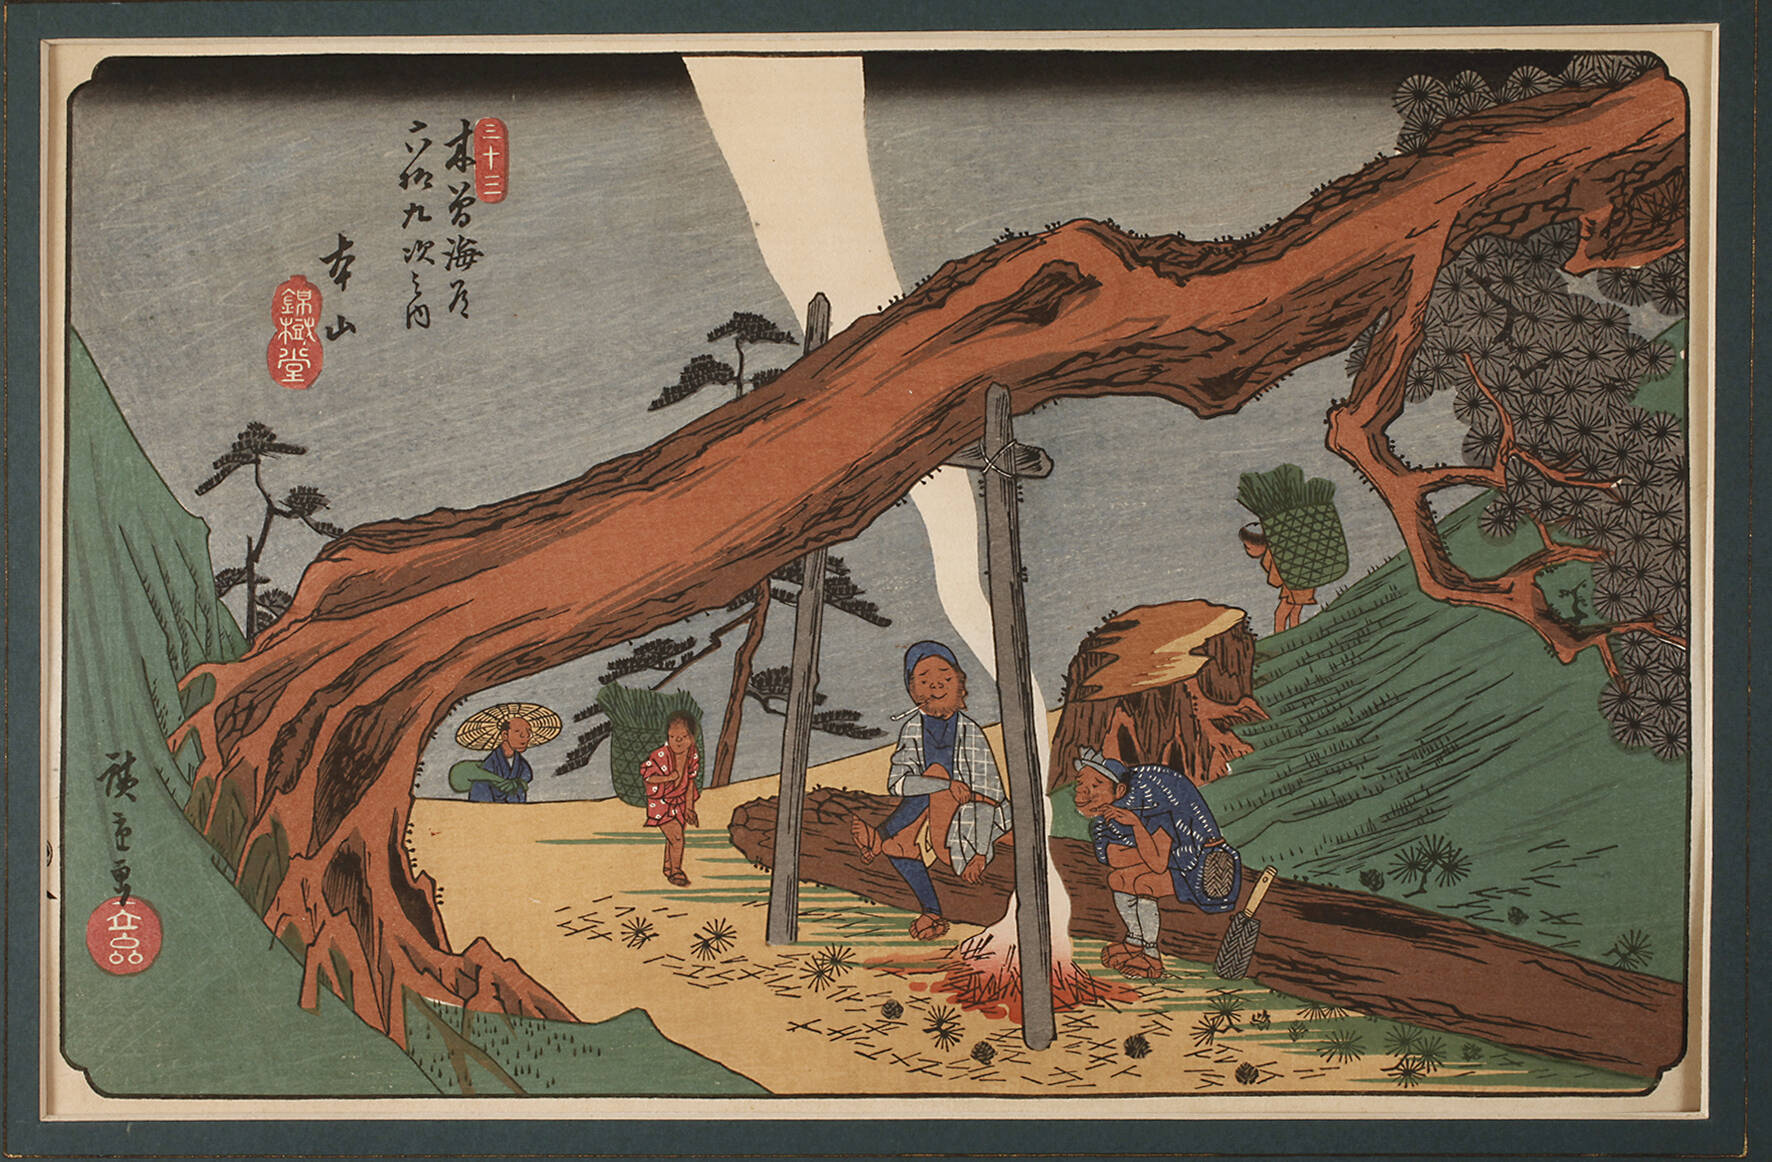 Farbholzschnitt Utagawa Hiroshige